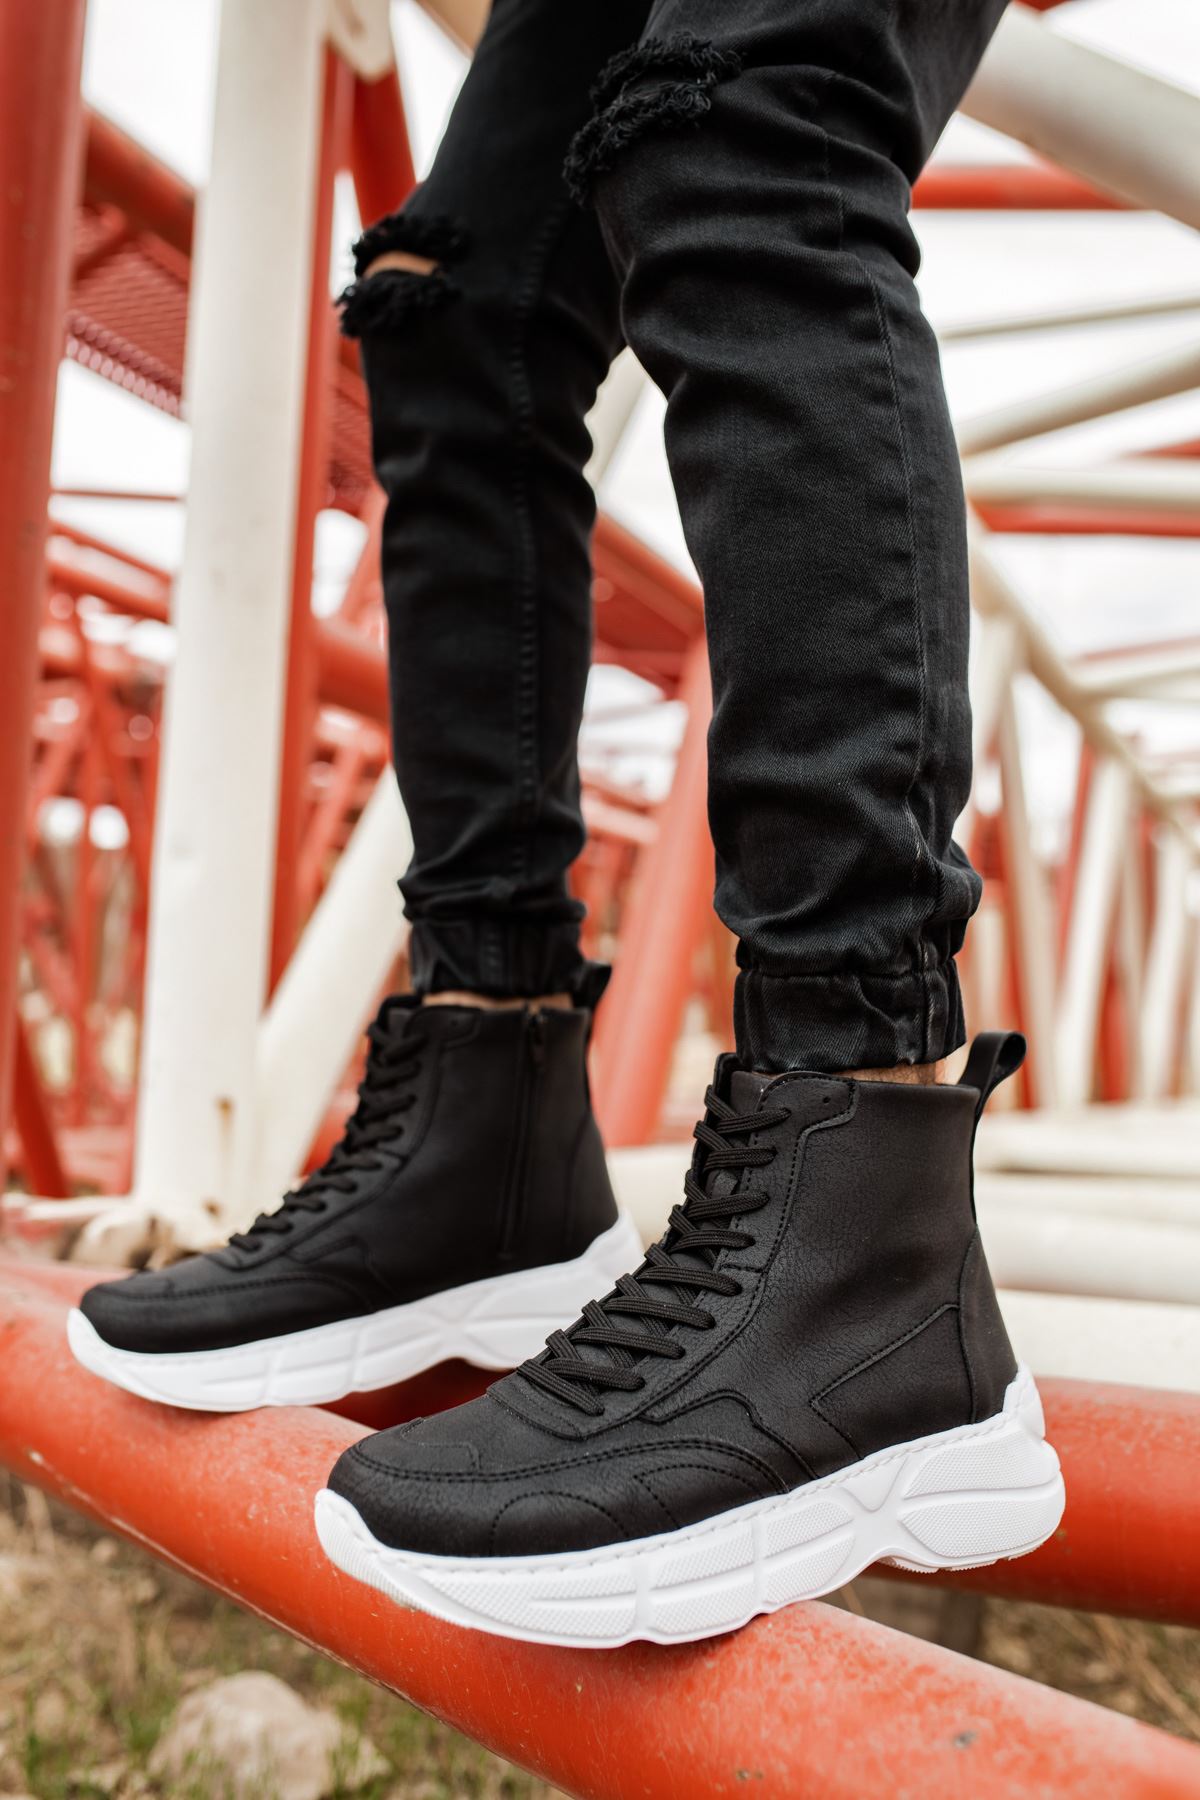 Original Design CH077 Men's Black-White Sole Casual Sneaker Sports Boots - STREETMODE ™